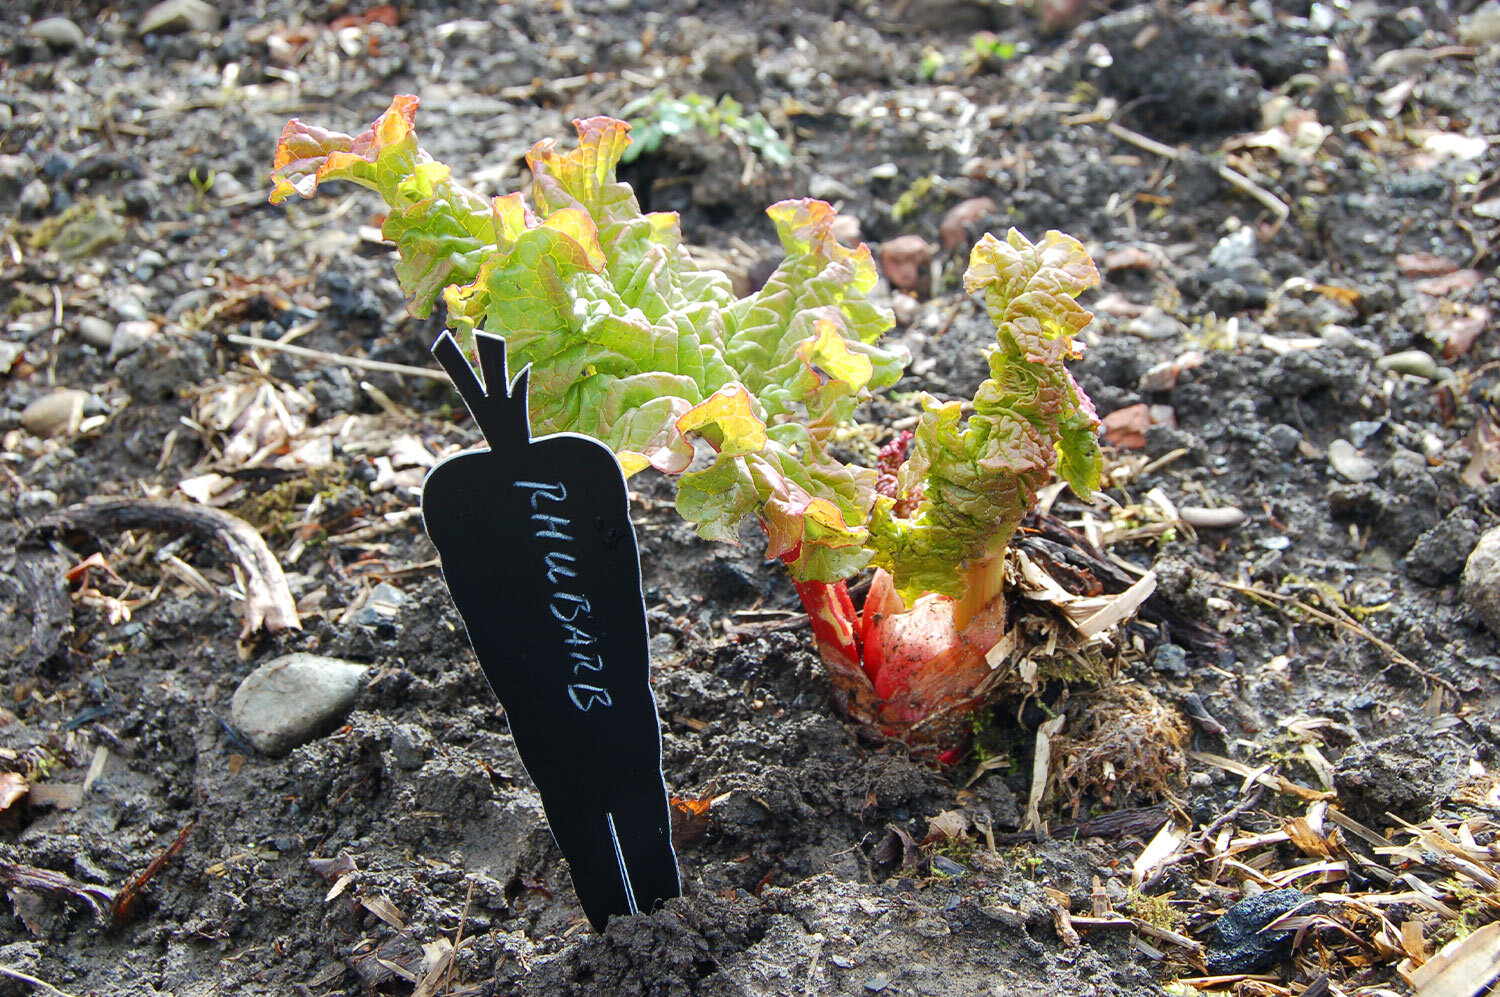 Blue-Marmalade-Grow-plant-label-recycled-plastic-rhubarb.jpg